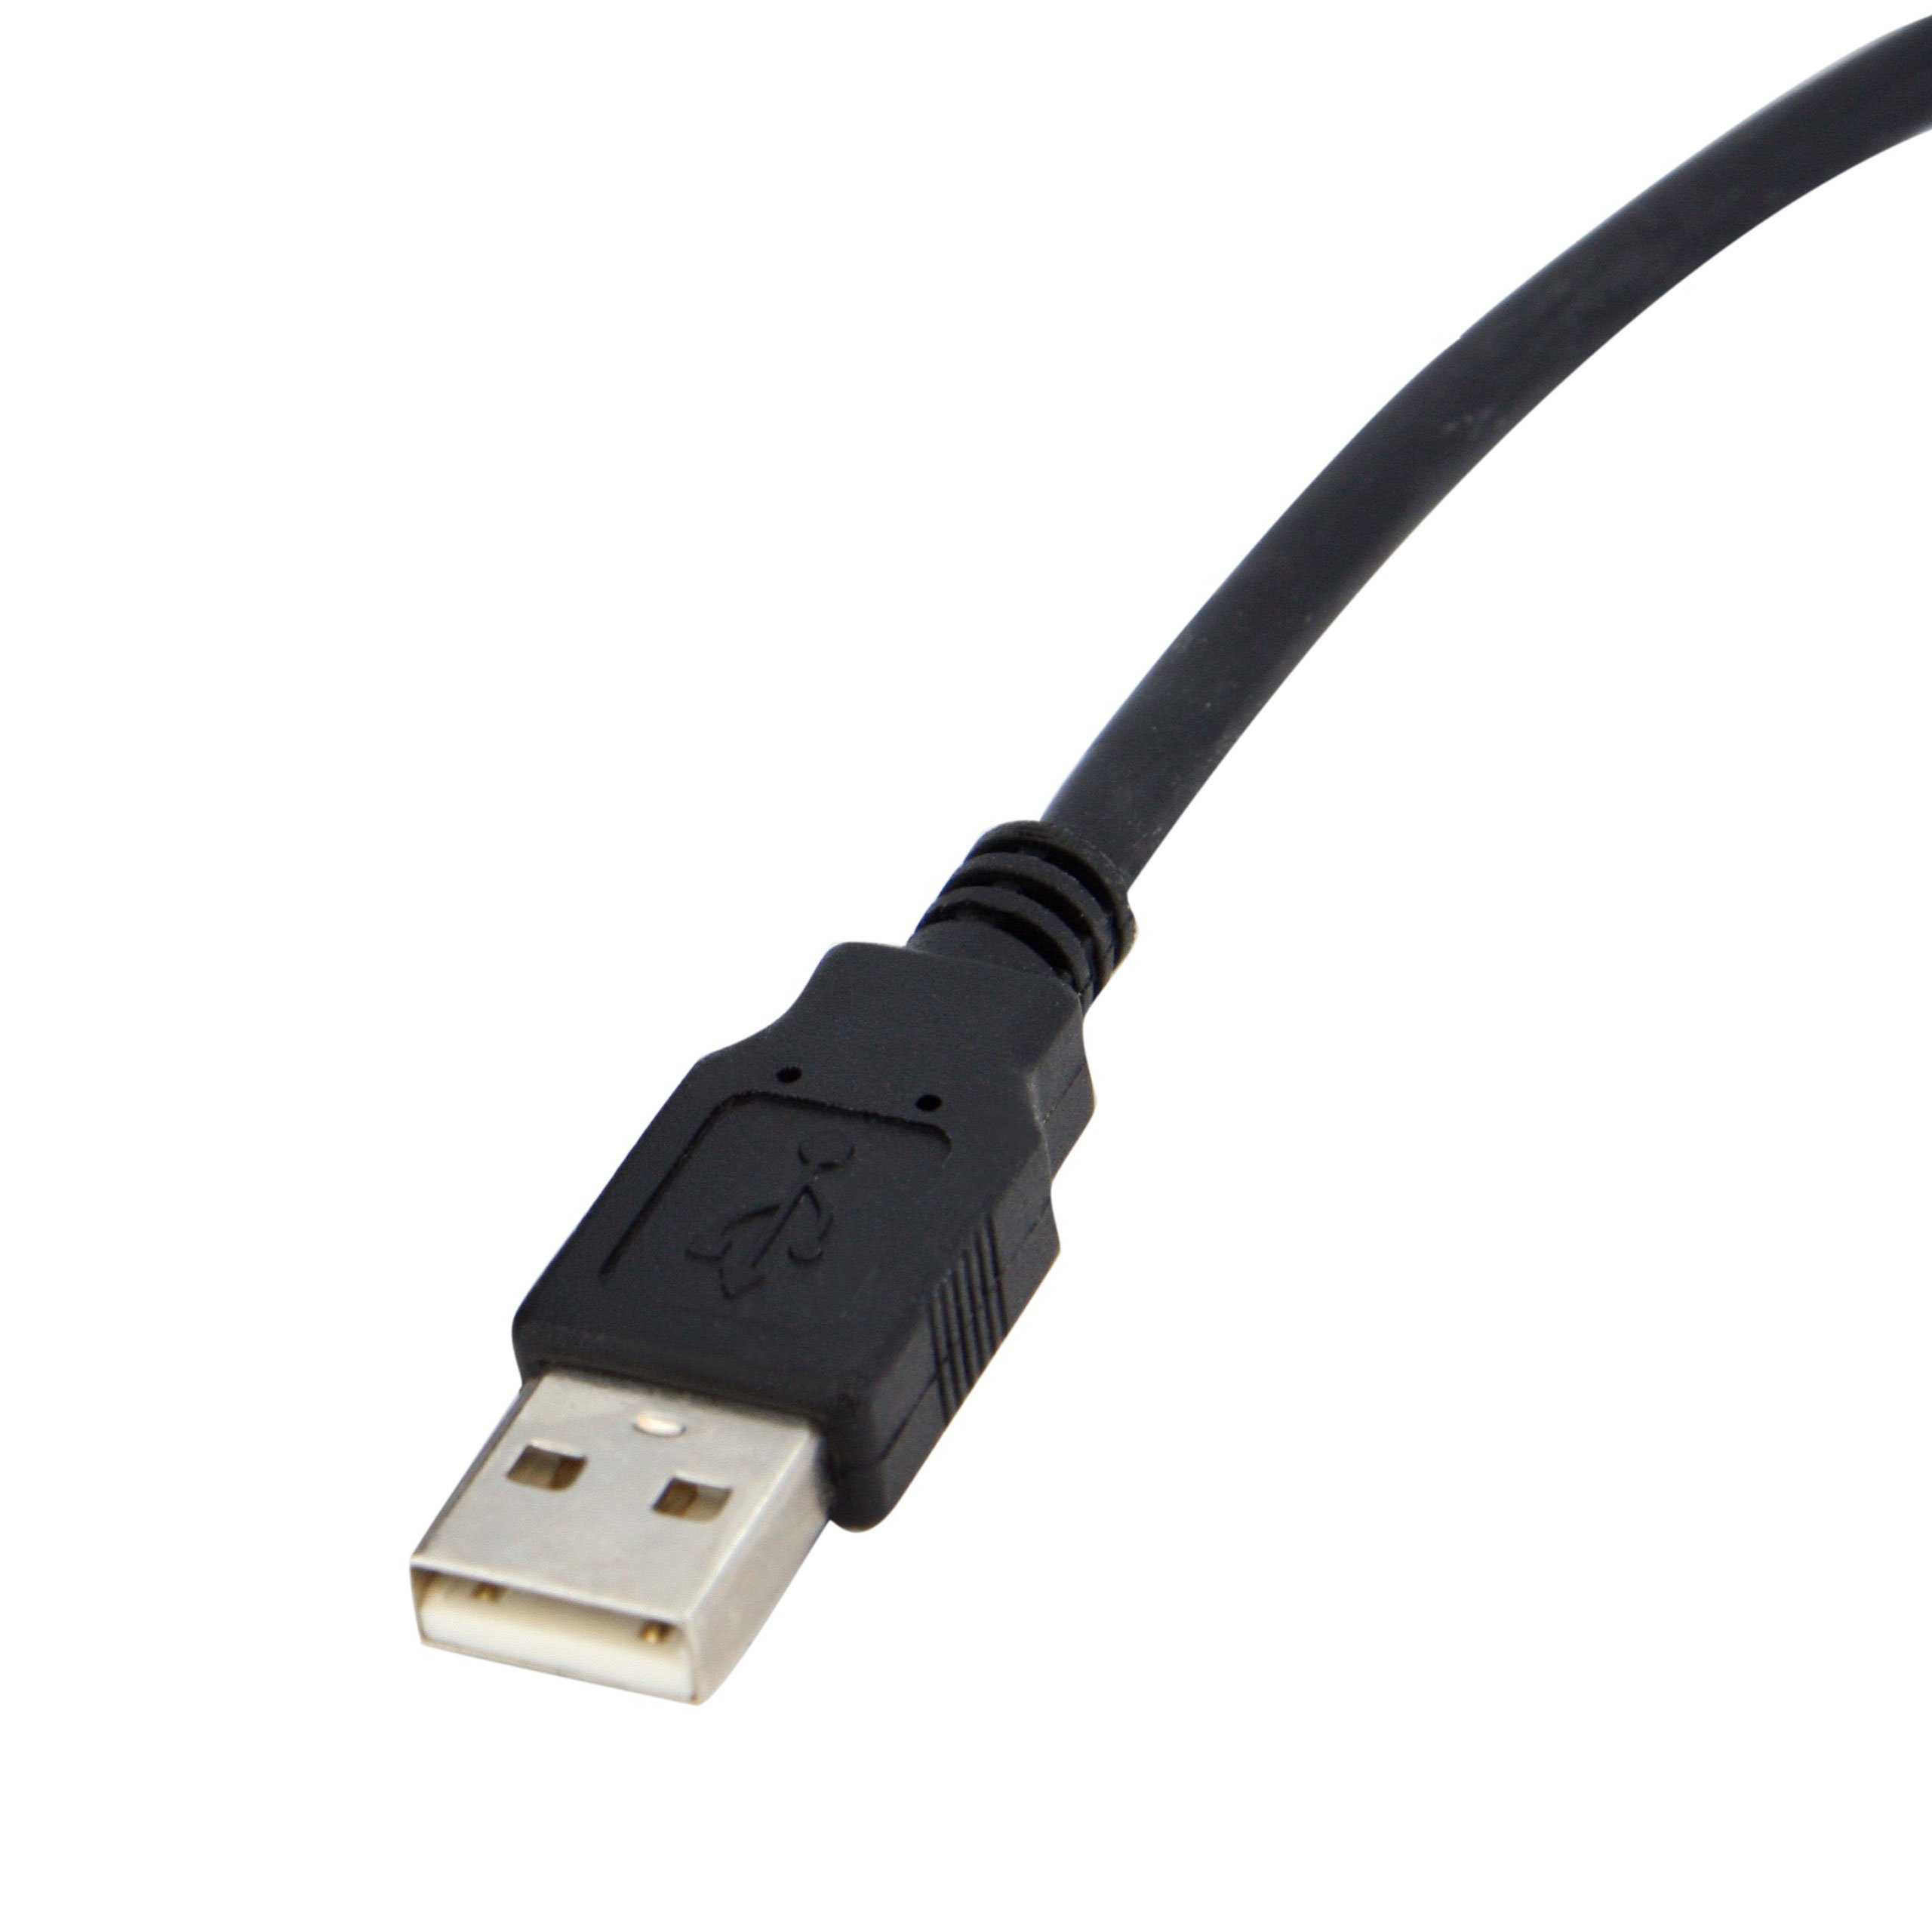 StarTech.com 6 ft Professional RS422/485 USB Serial Cable Adapter w/ COM Retention (ICUSB422)